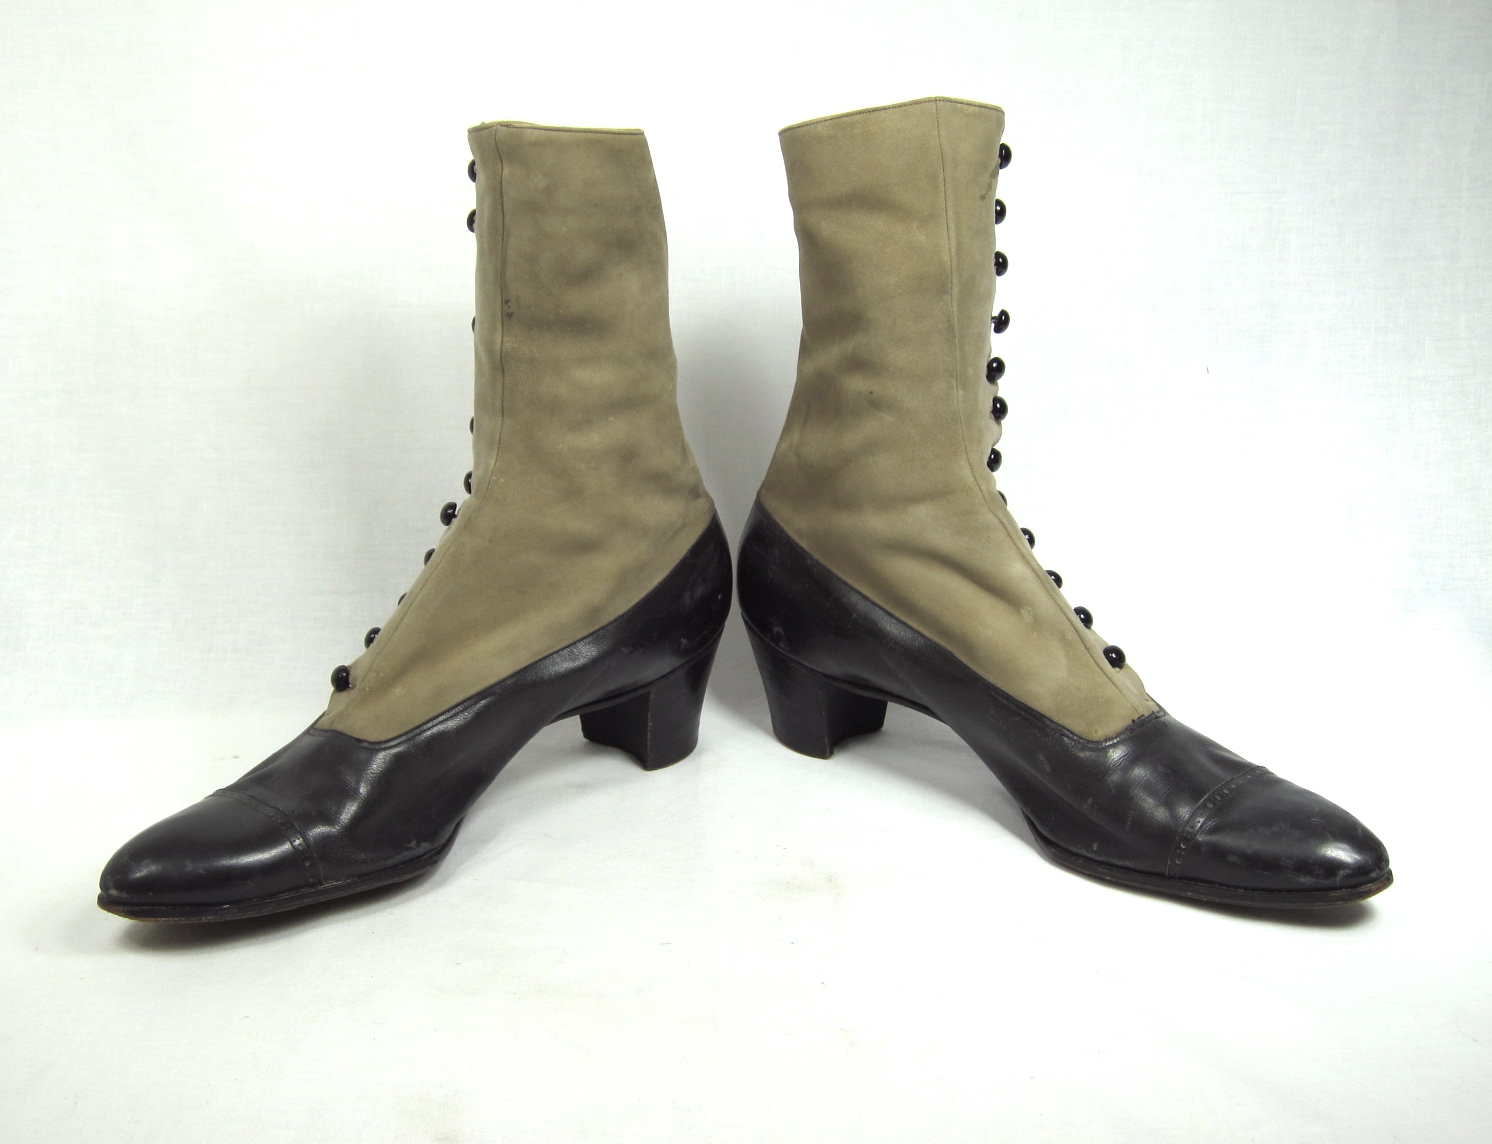 Schoenen damesschoenen Laarzen Enkellaarsjes Antique High BUTTON BOOTS Edwardian Ladies All Original Black Leather Chunky Heels Antique Button Hook Early 1900's Near Mint Condition 